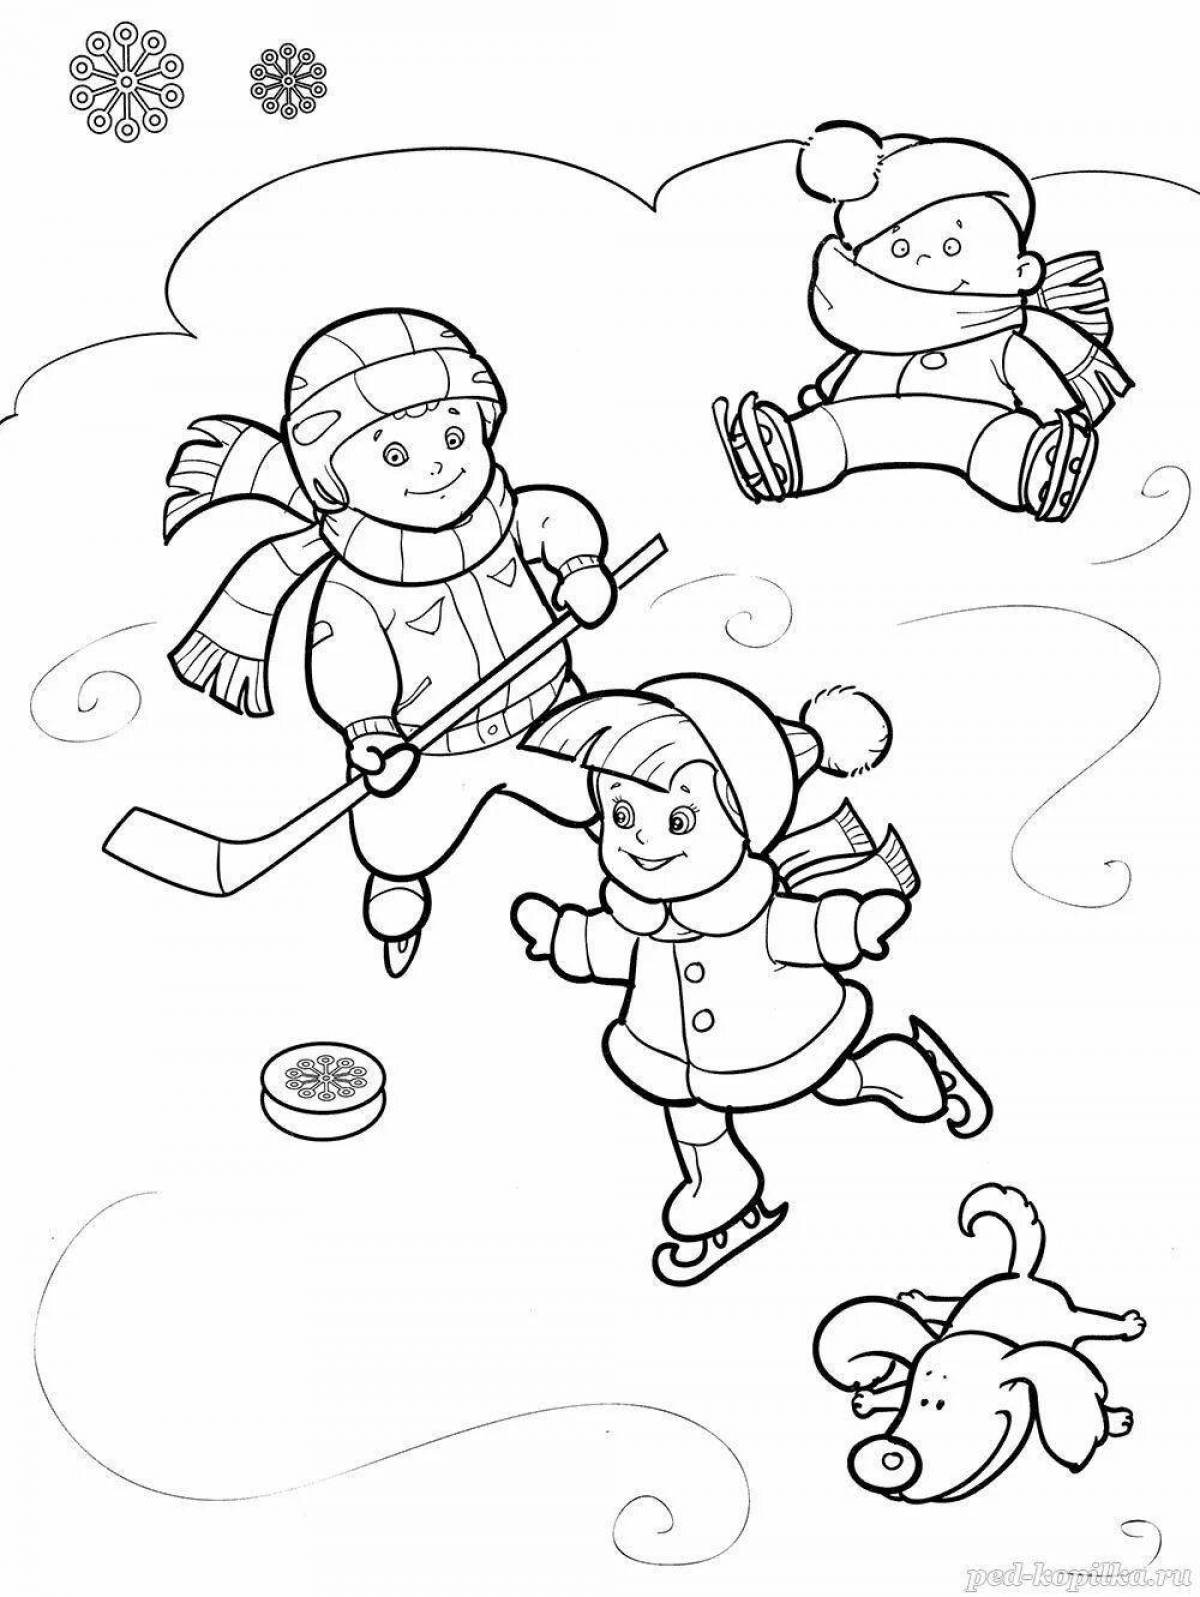 Smart kids play hockey